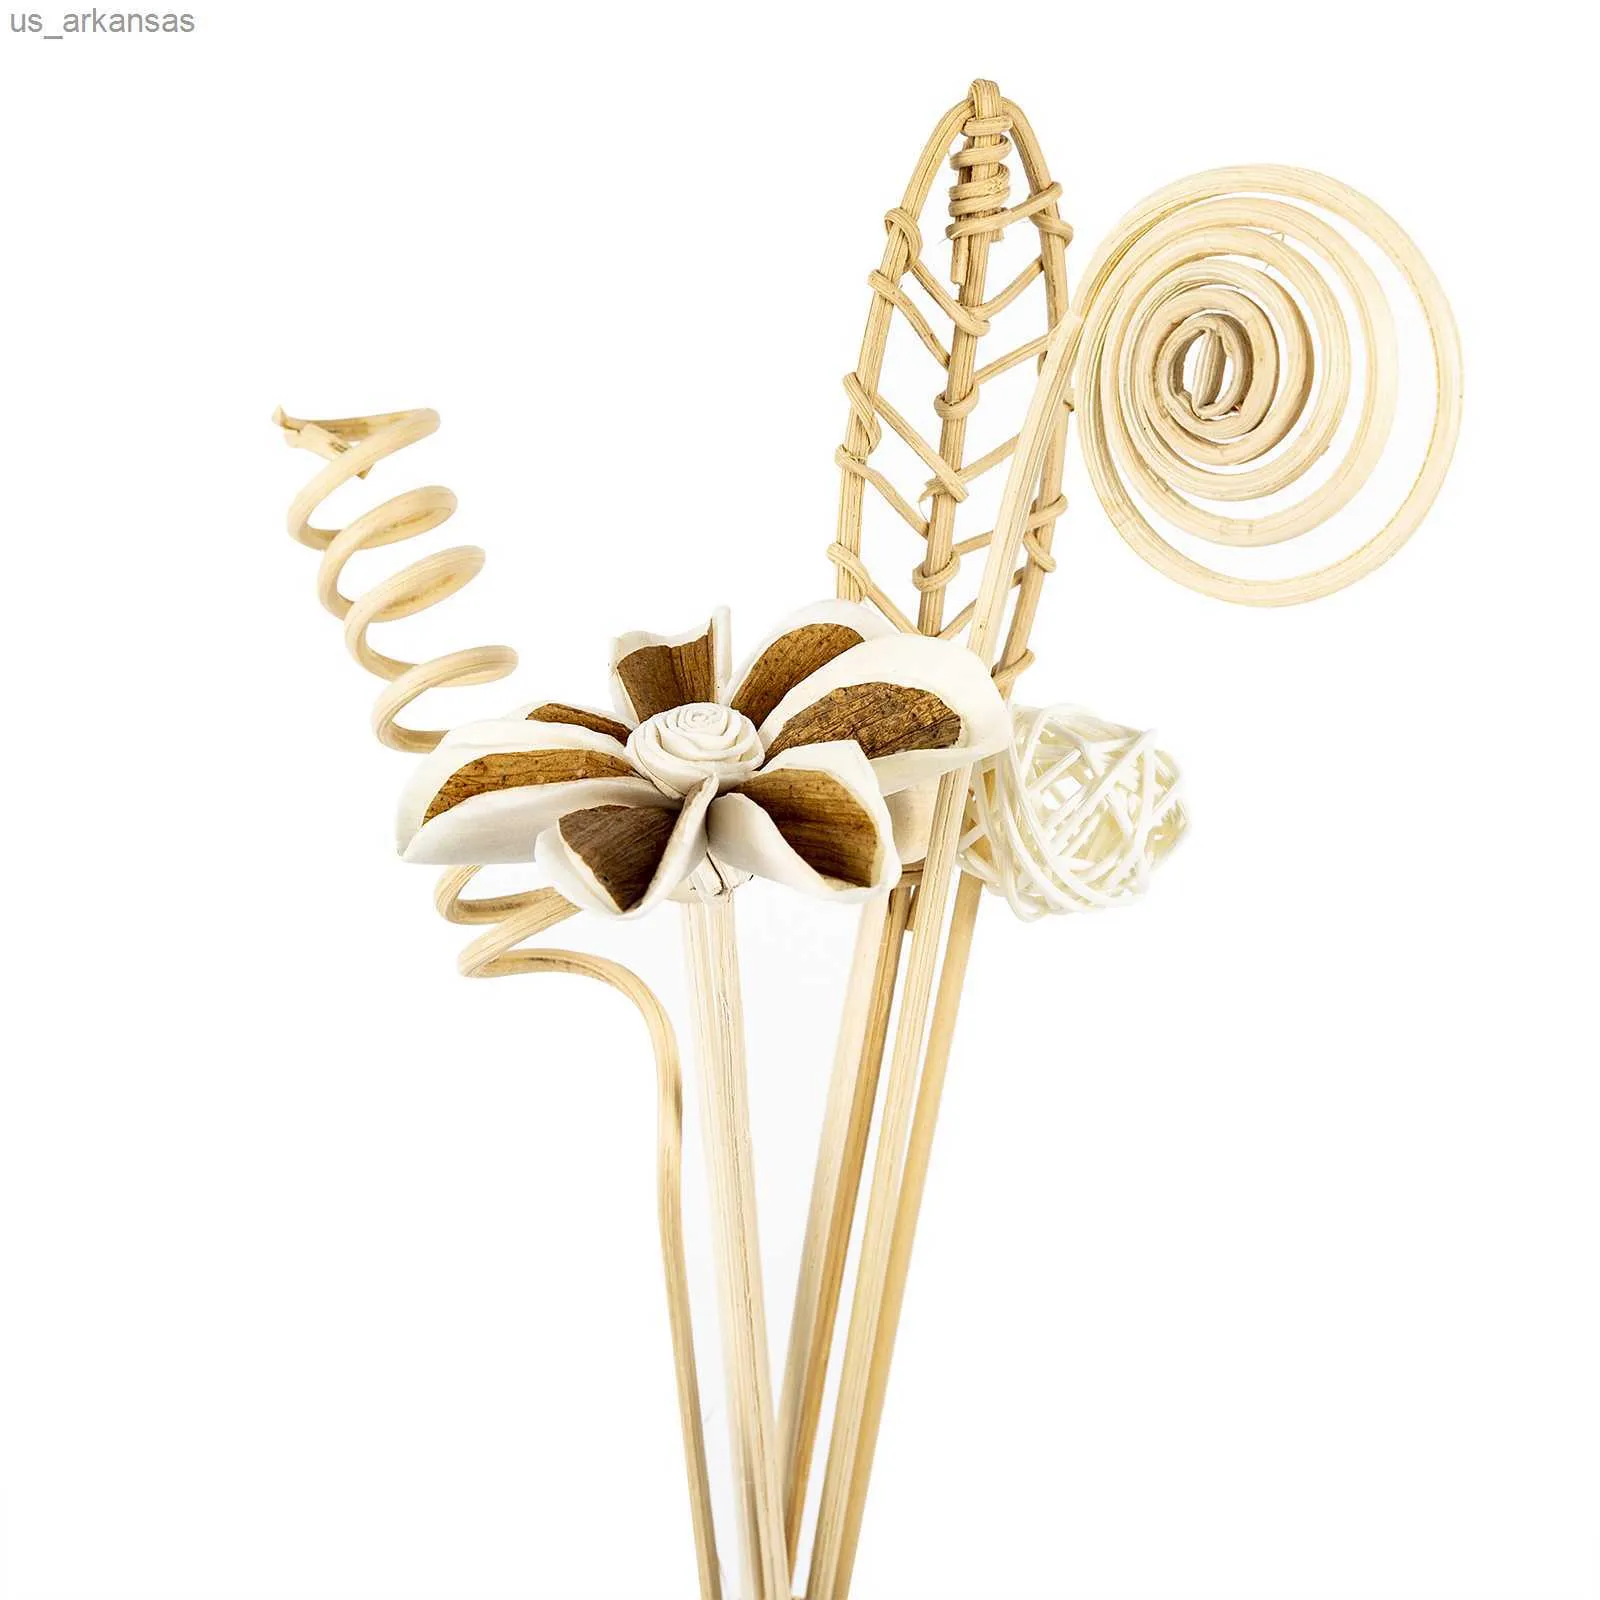 6PCS Rinde Blume Rattan Sticks Feuerlose Düfte Reed Diffusor Stick DIY Ornamente Wohnkultur